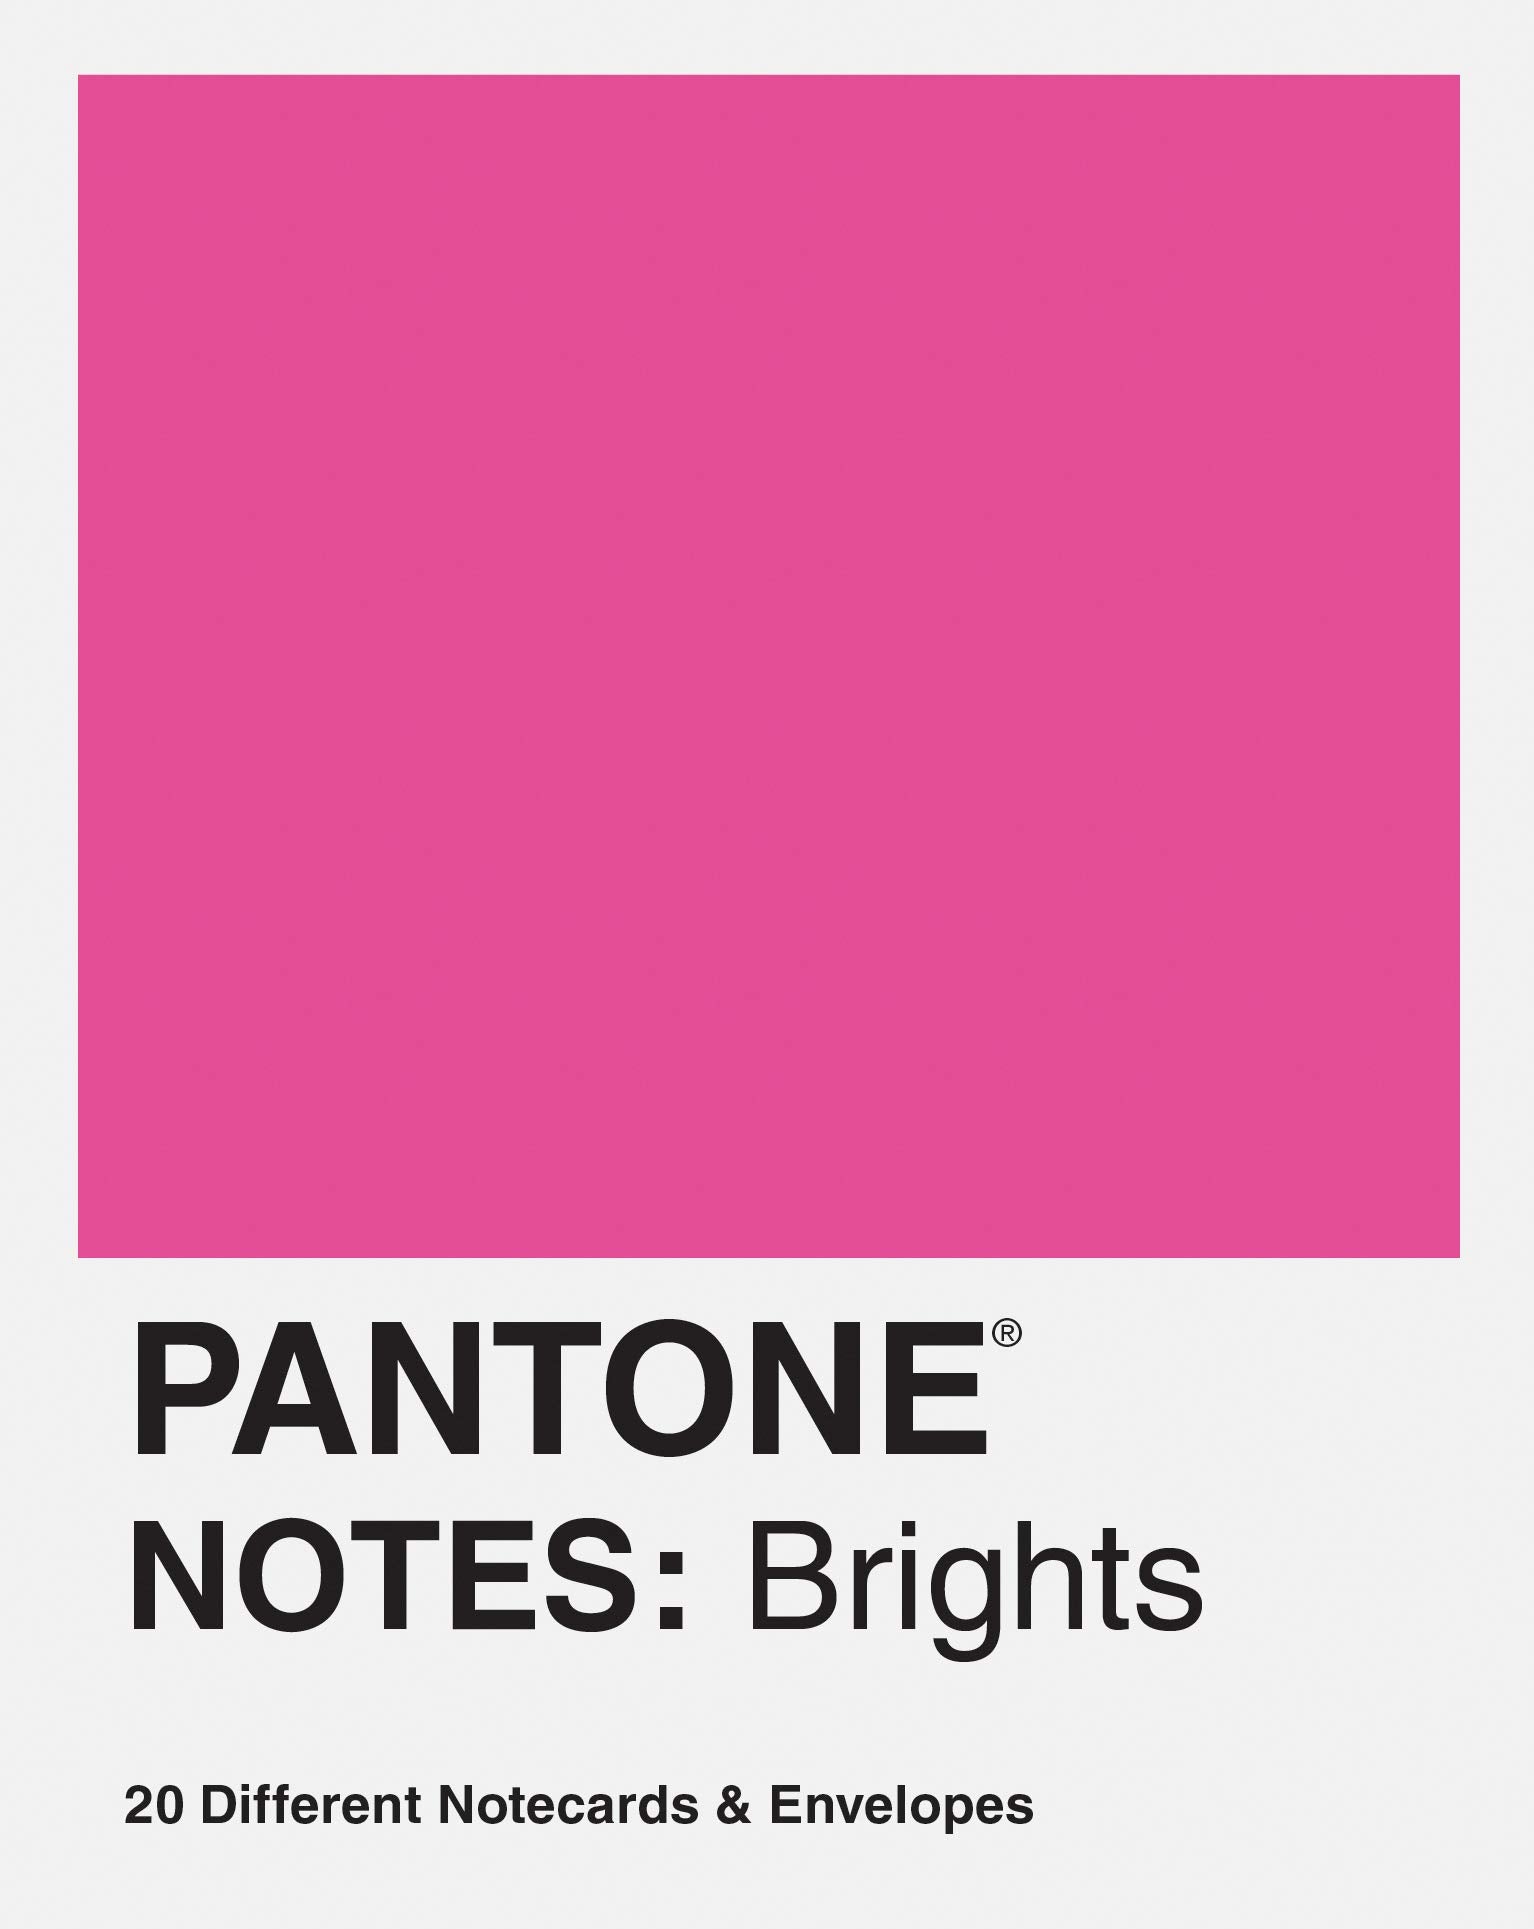 Stock image of Pantone Notes: Brights notecards box.